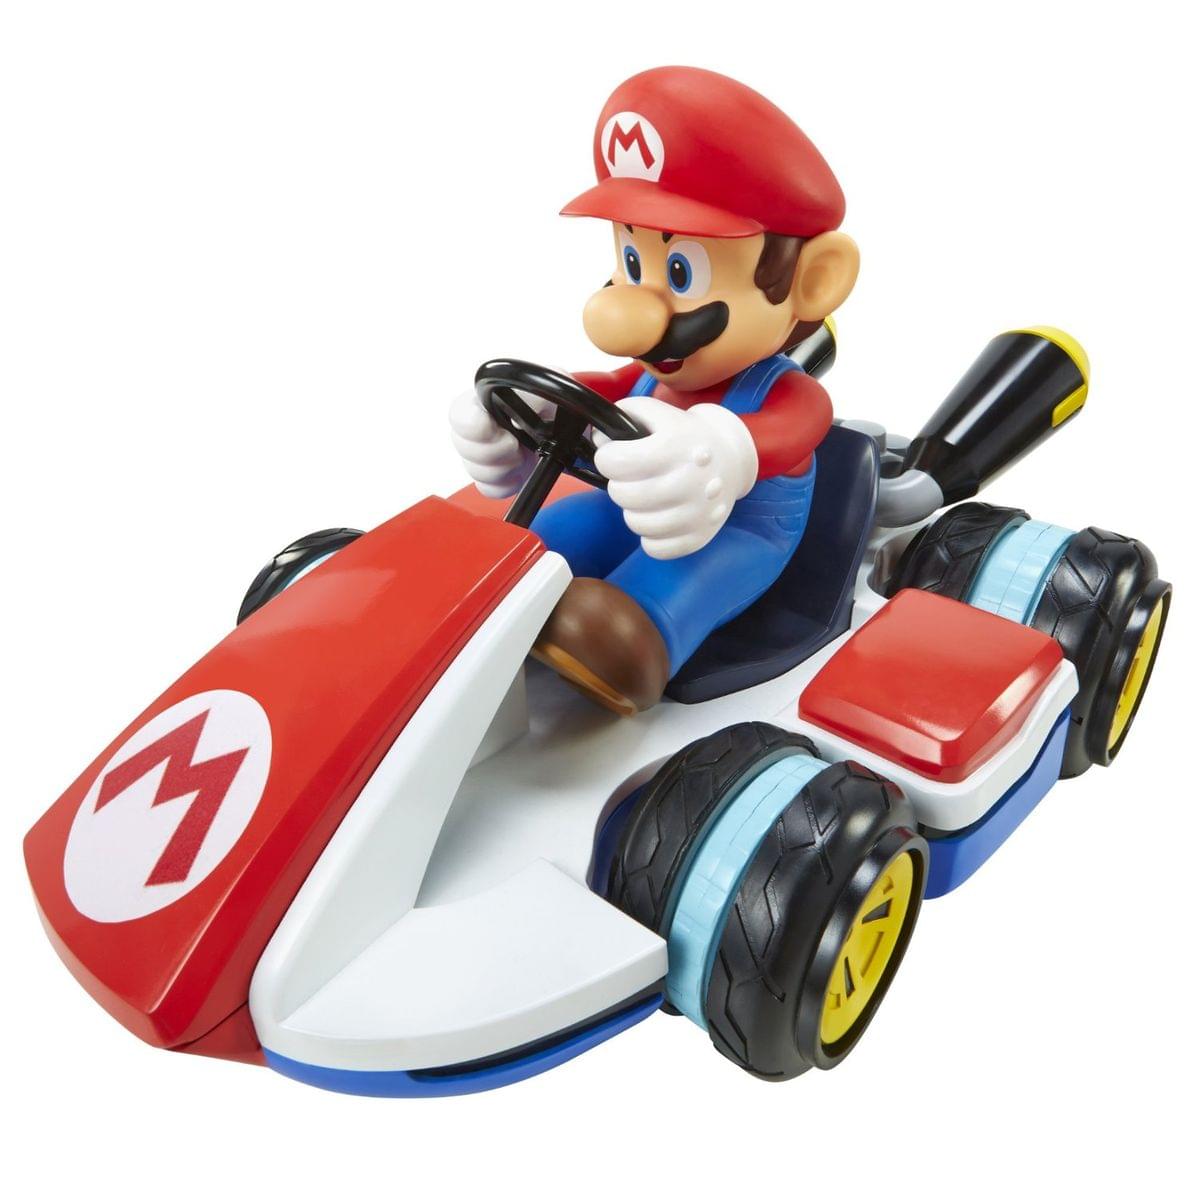 World of Nintendo Mario Mini RC Racer Vehicle